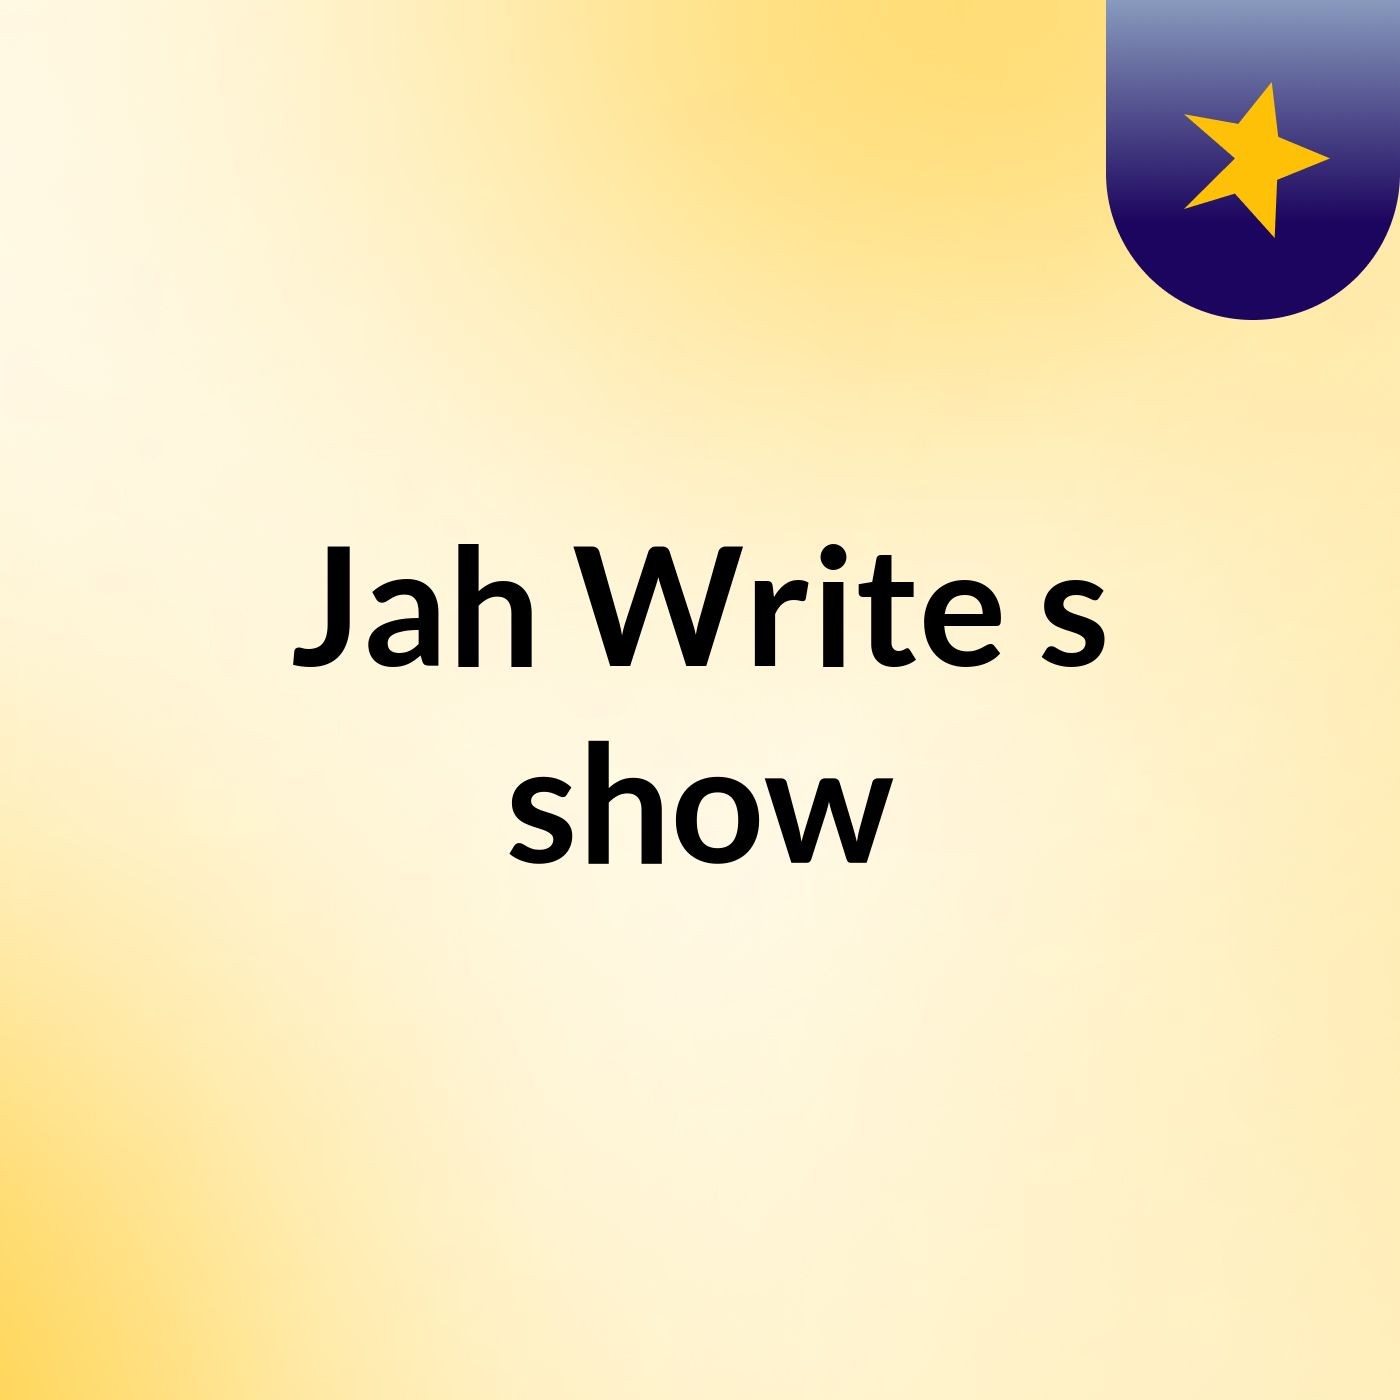 Jah Write's show